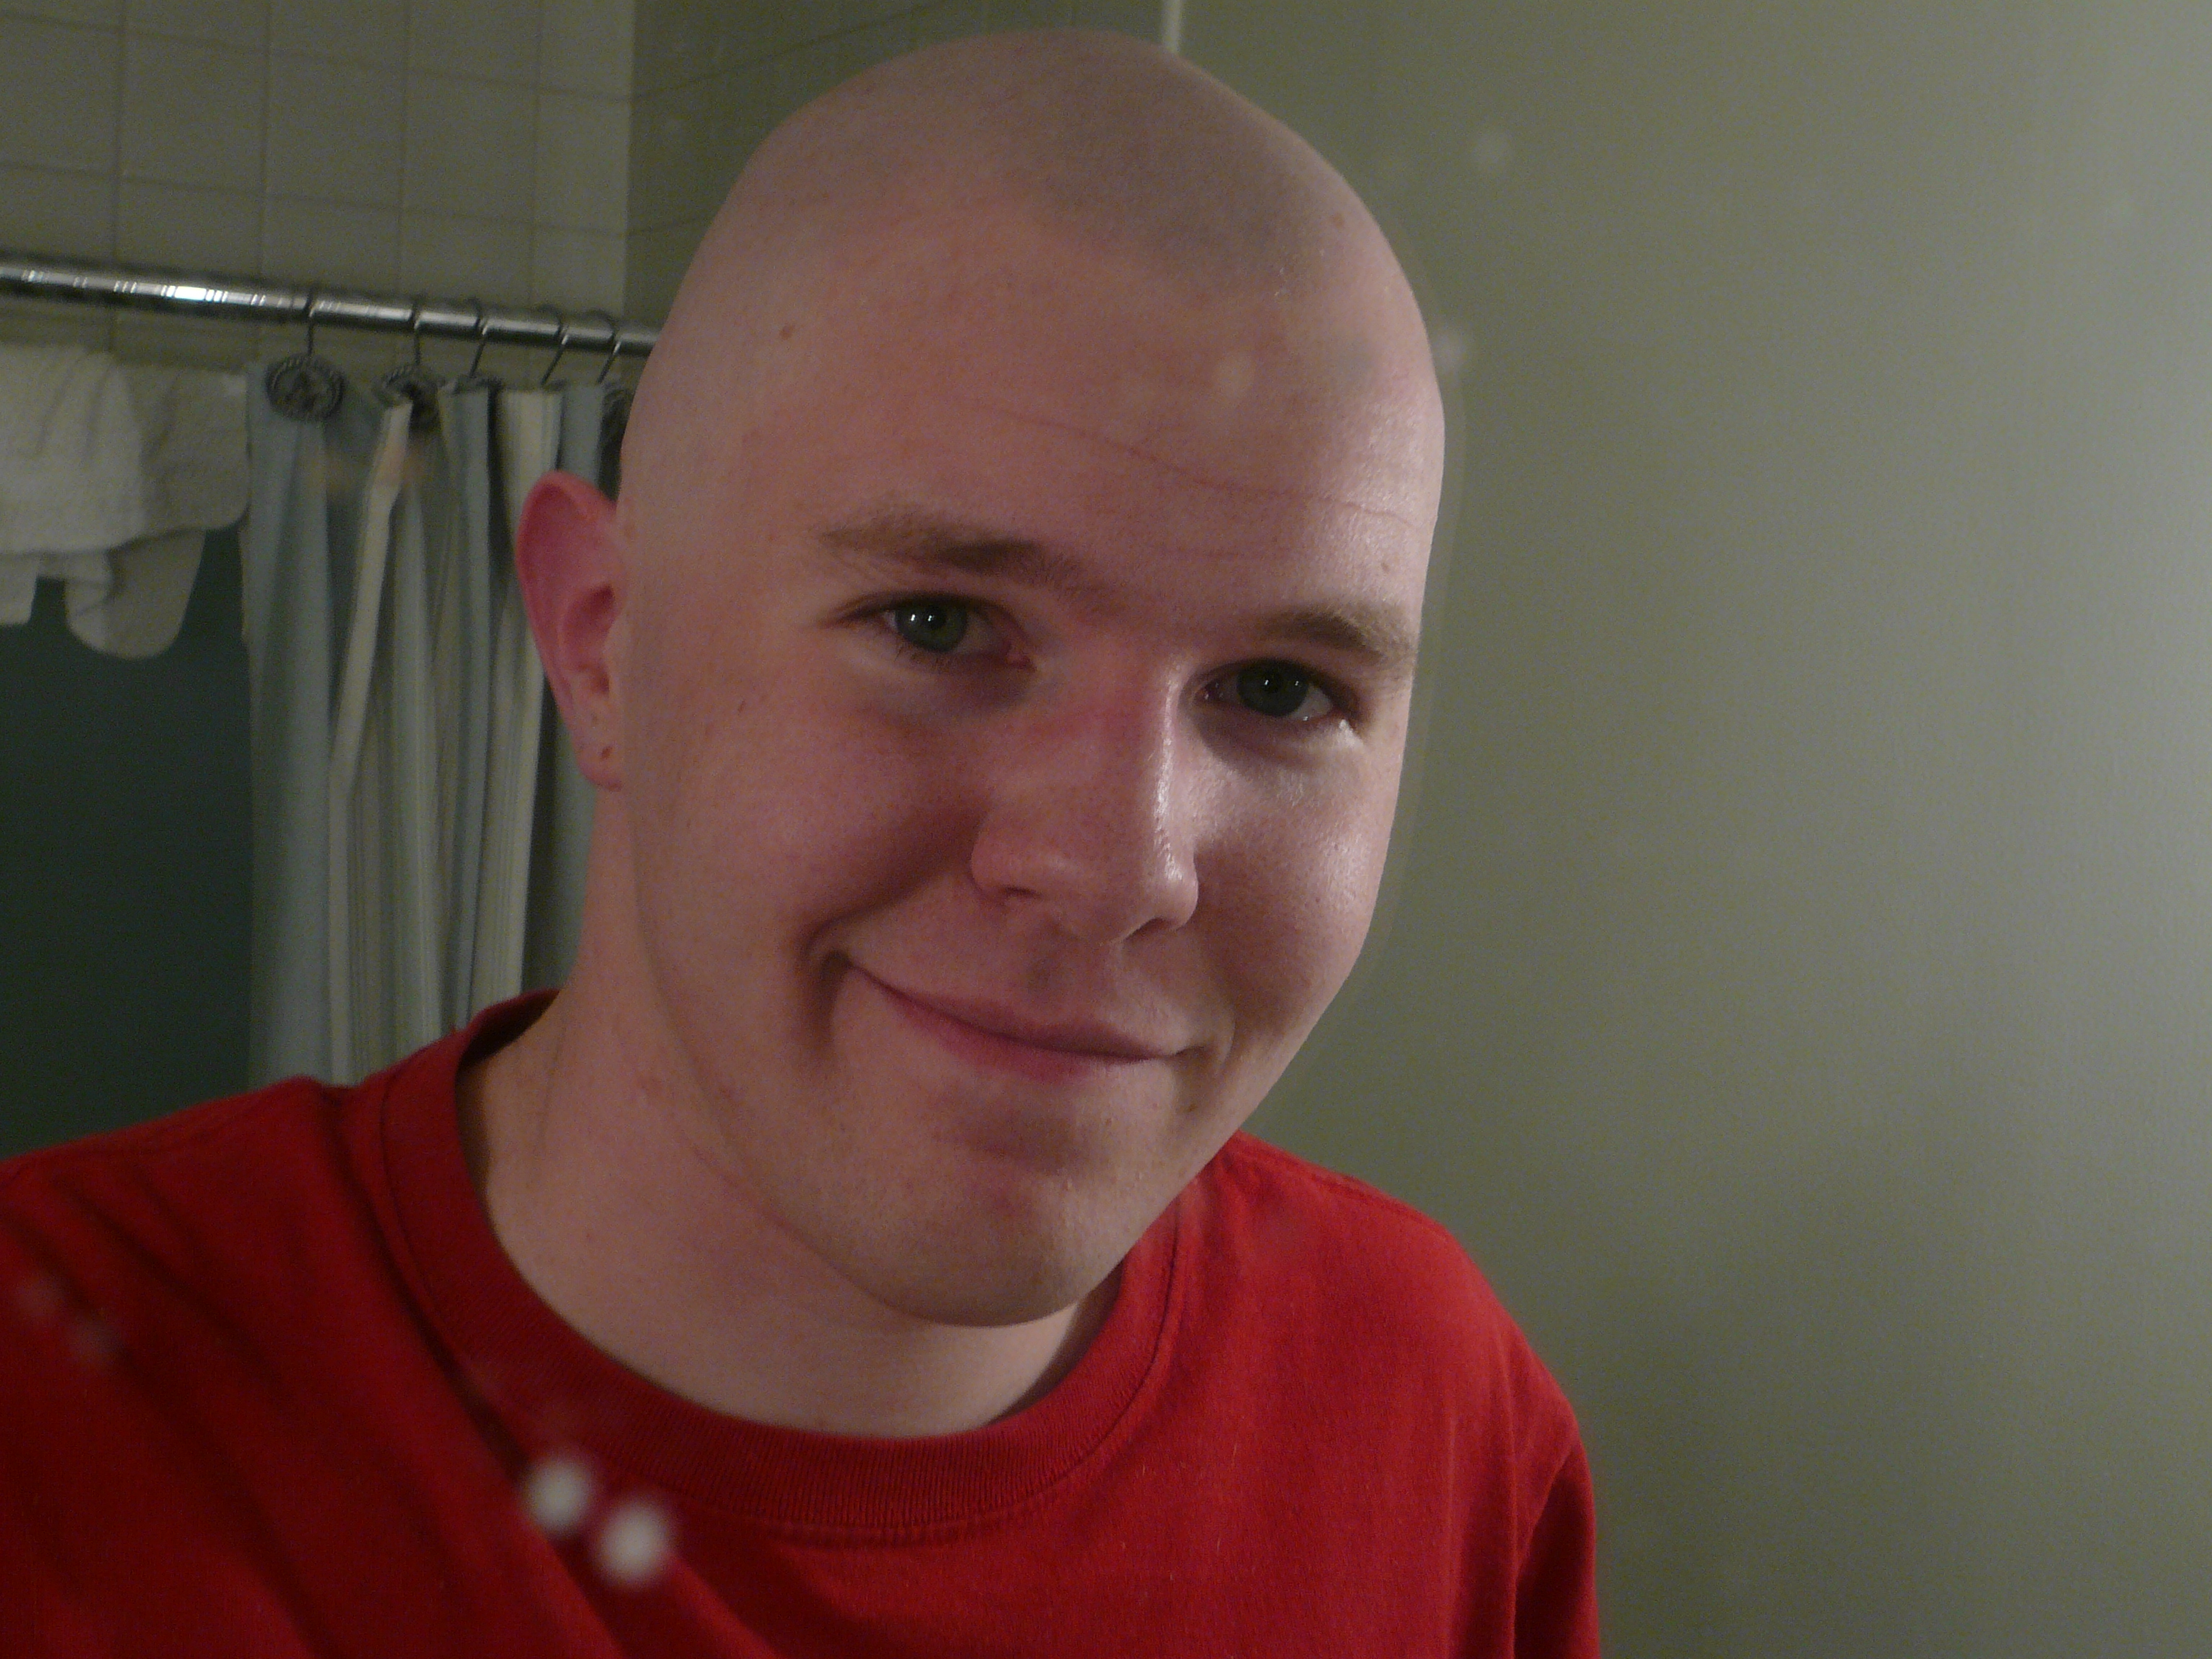 Shaved head white guy